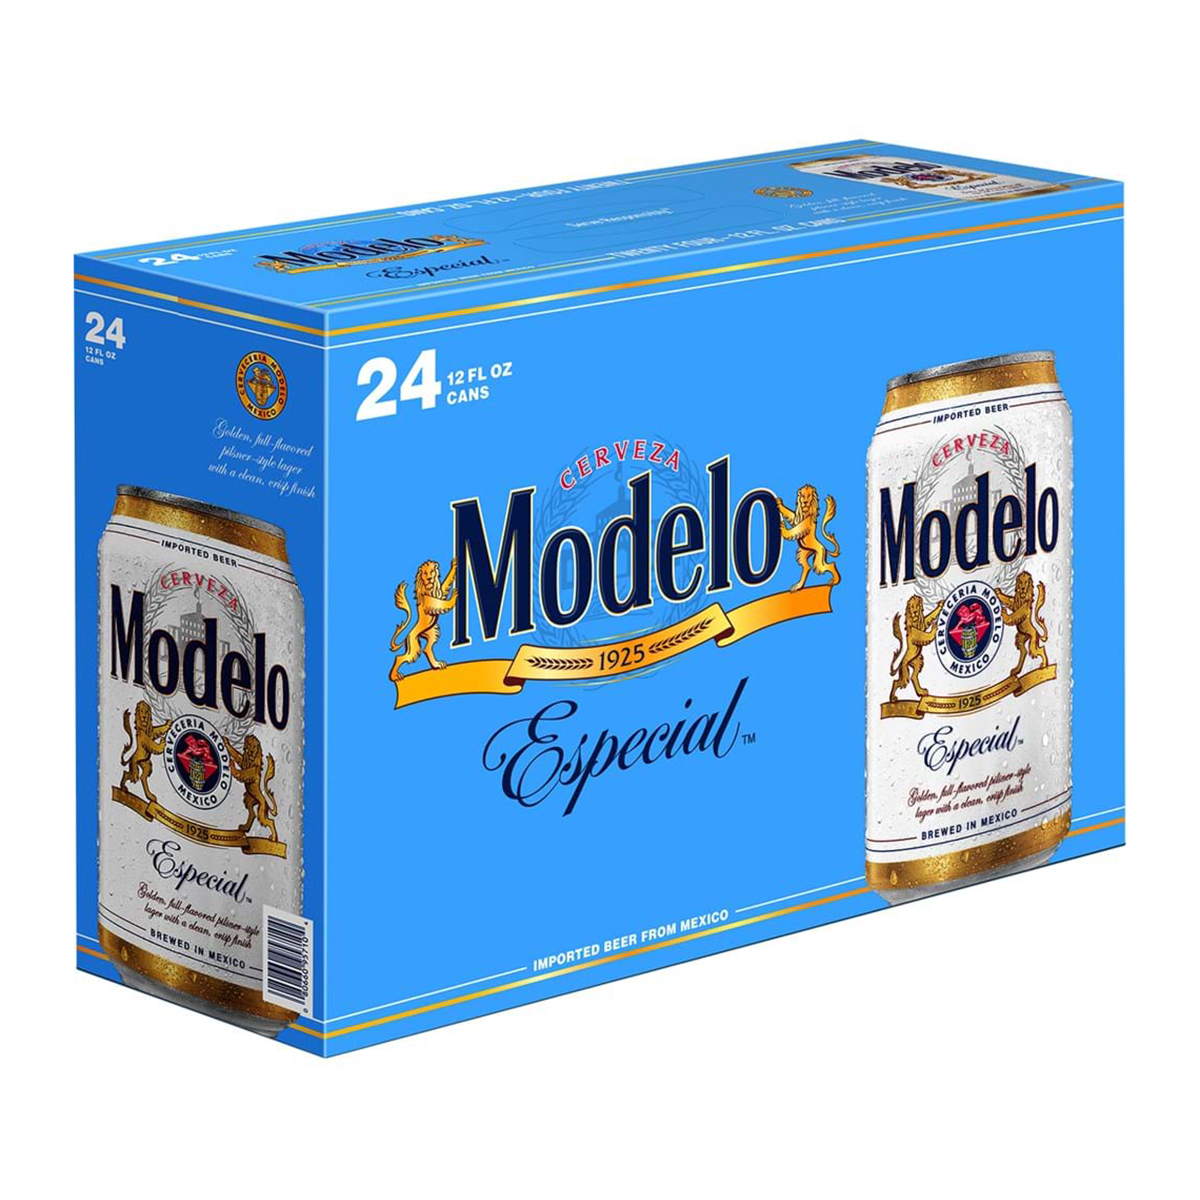 Model especial, 24 pack 12 oz can – Your local neighborhood liquor ...